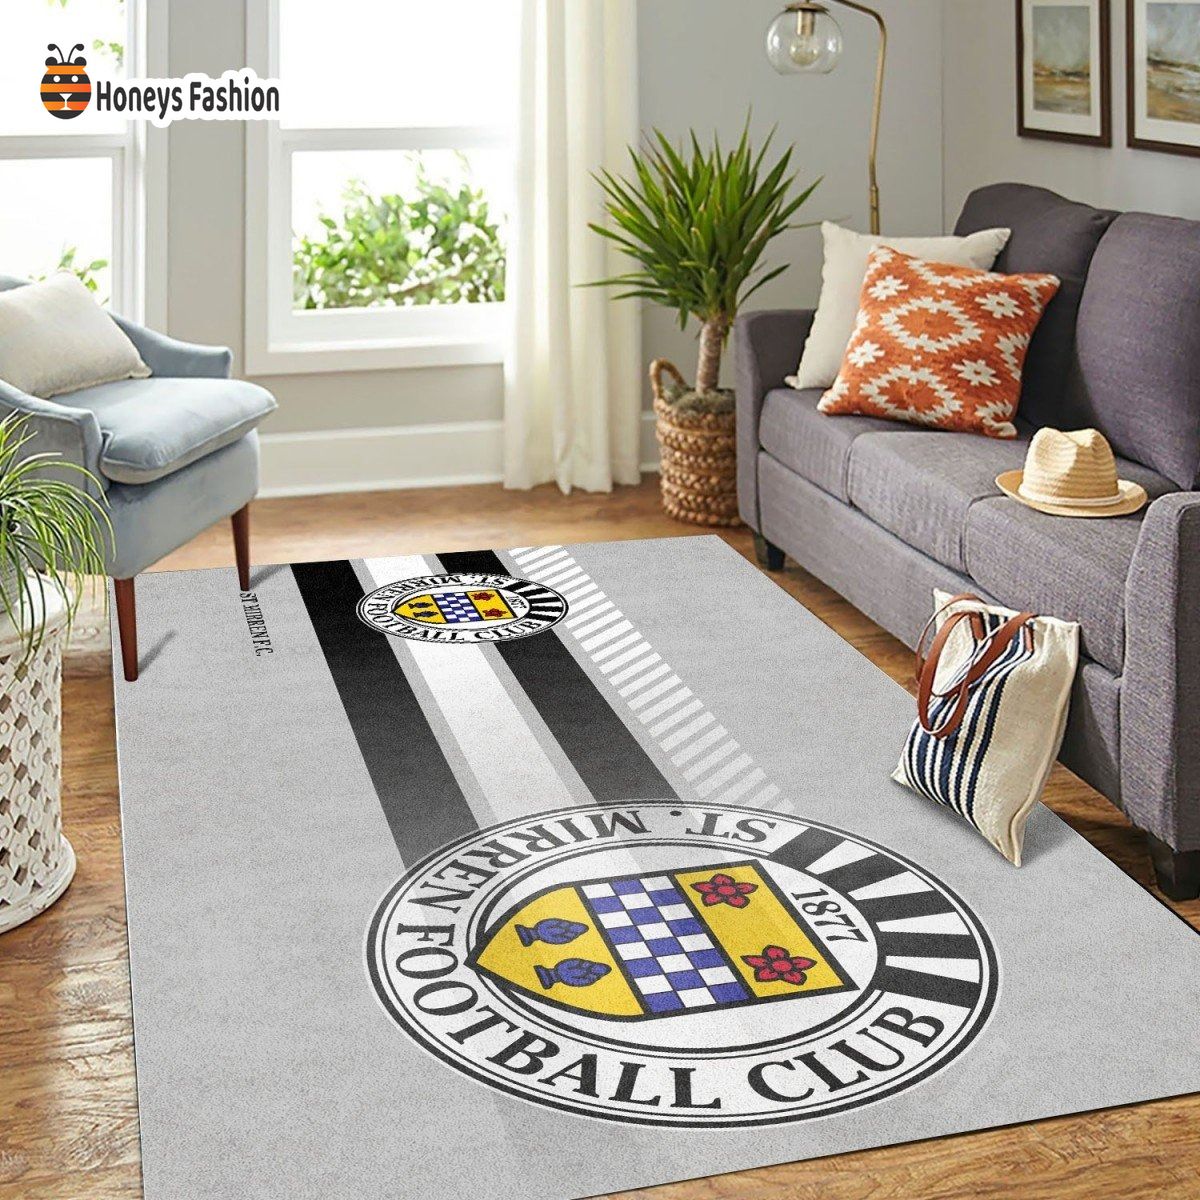 St Mirren F.C. Rug Carpet